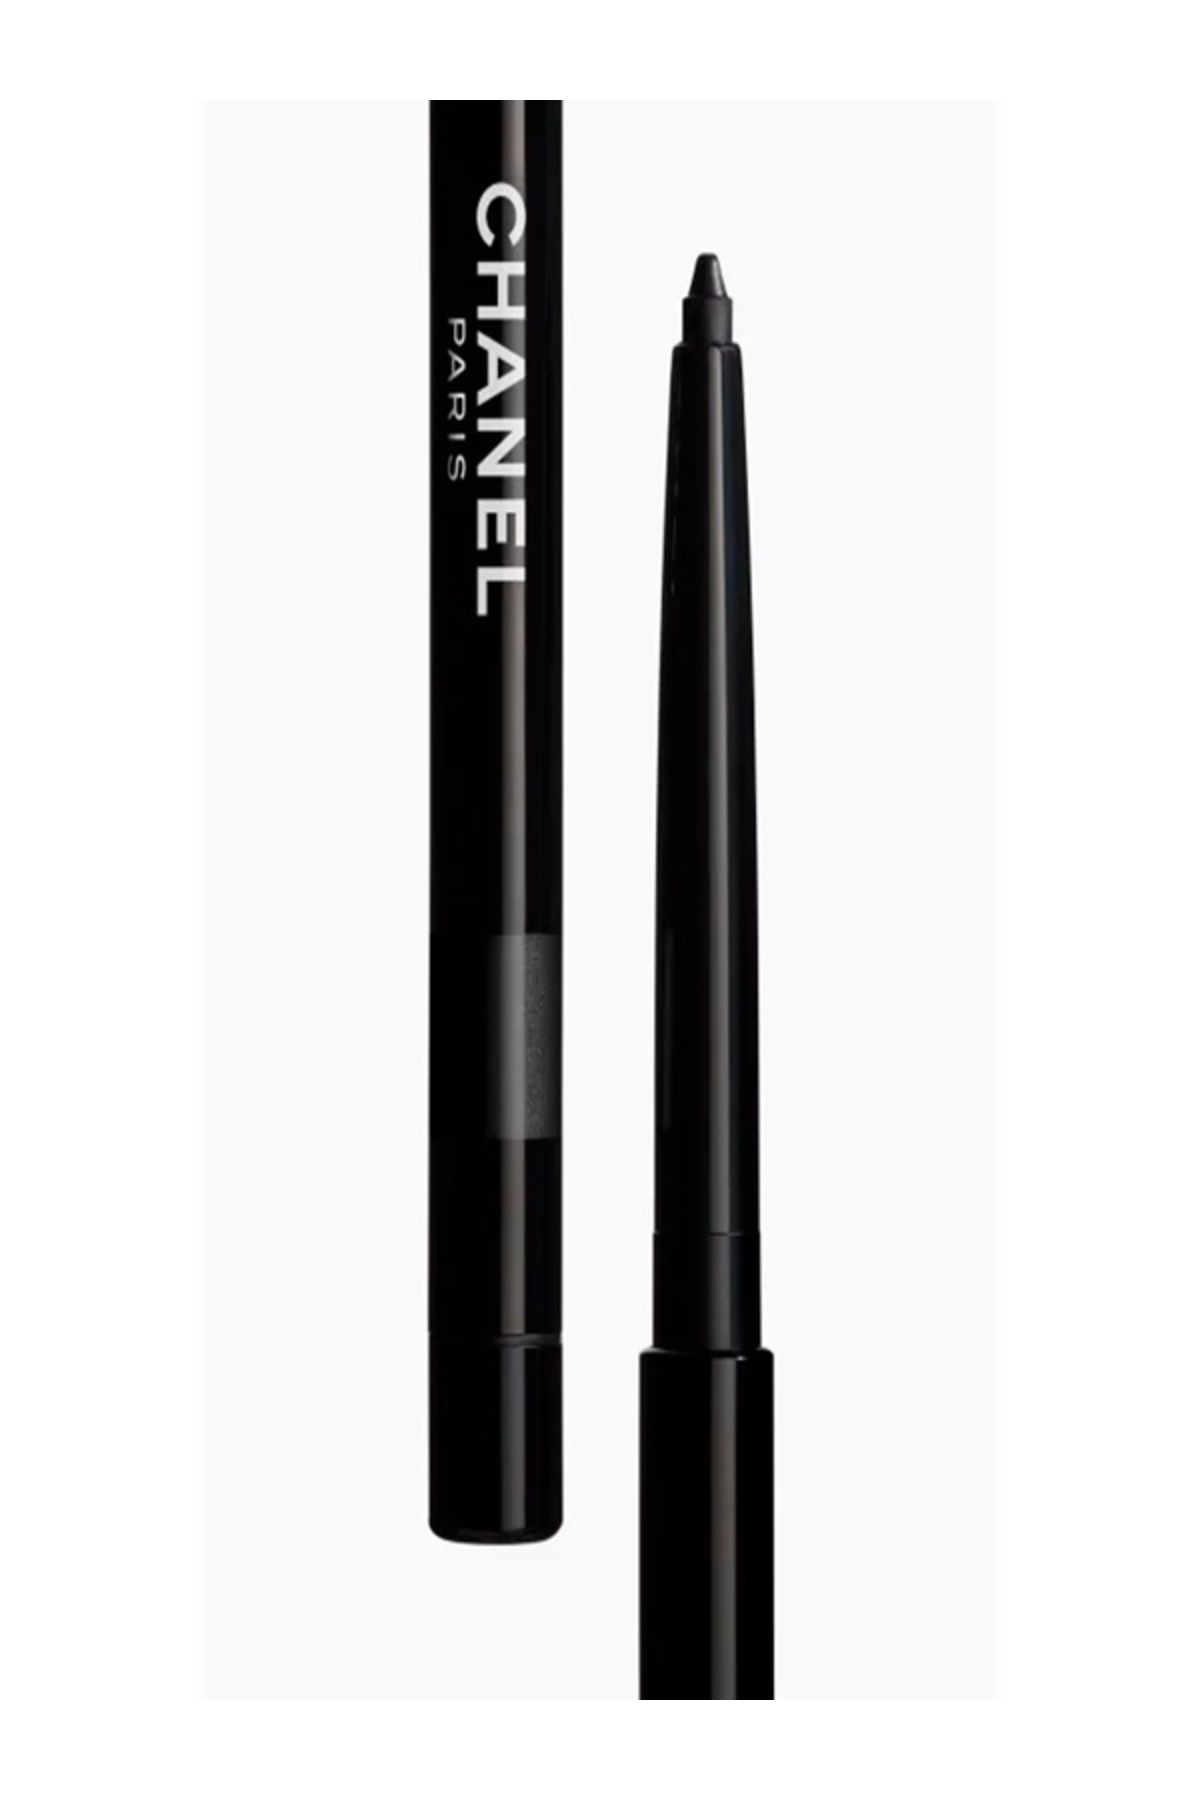 Chanel مداد چشم ضد آب STYLO YEUX برای چشم های حساس رنگ مشکی